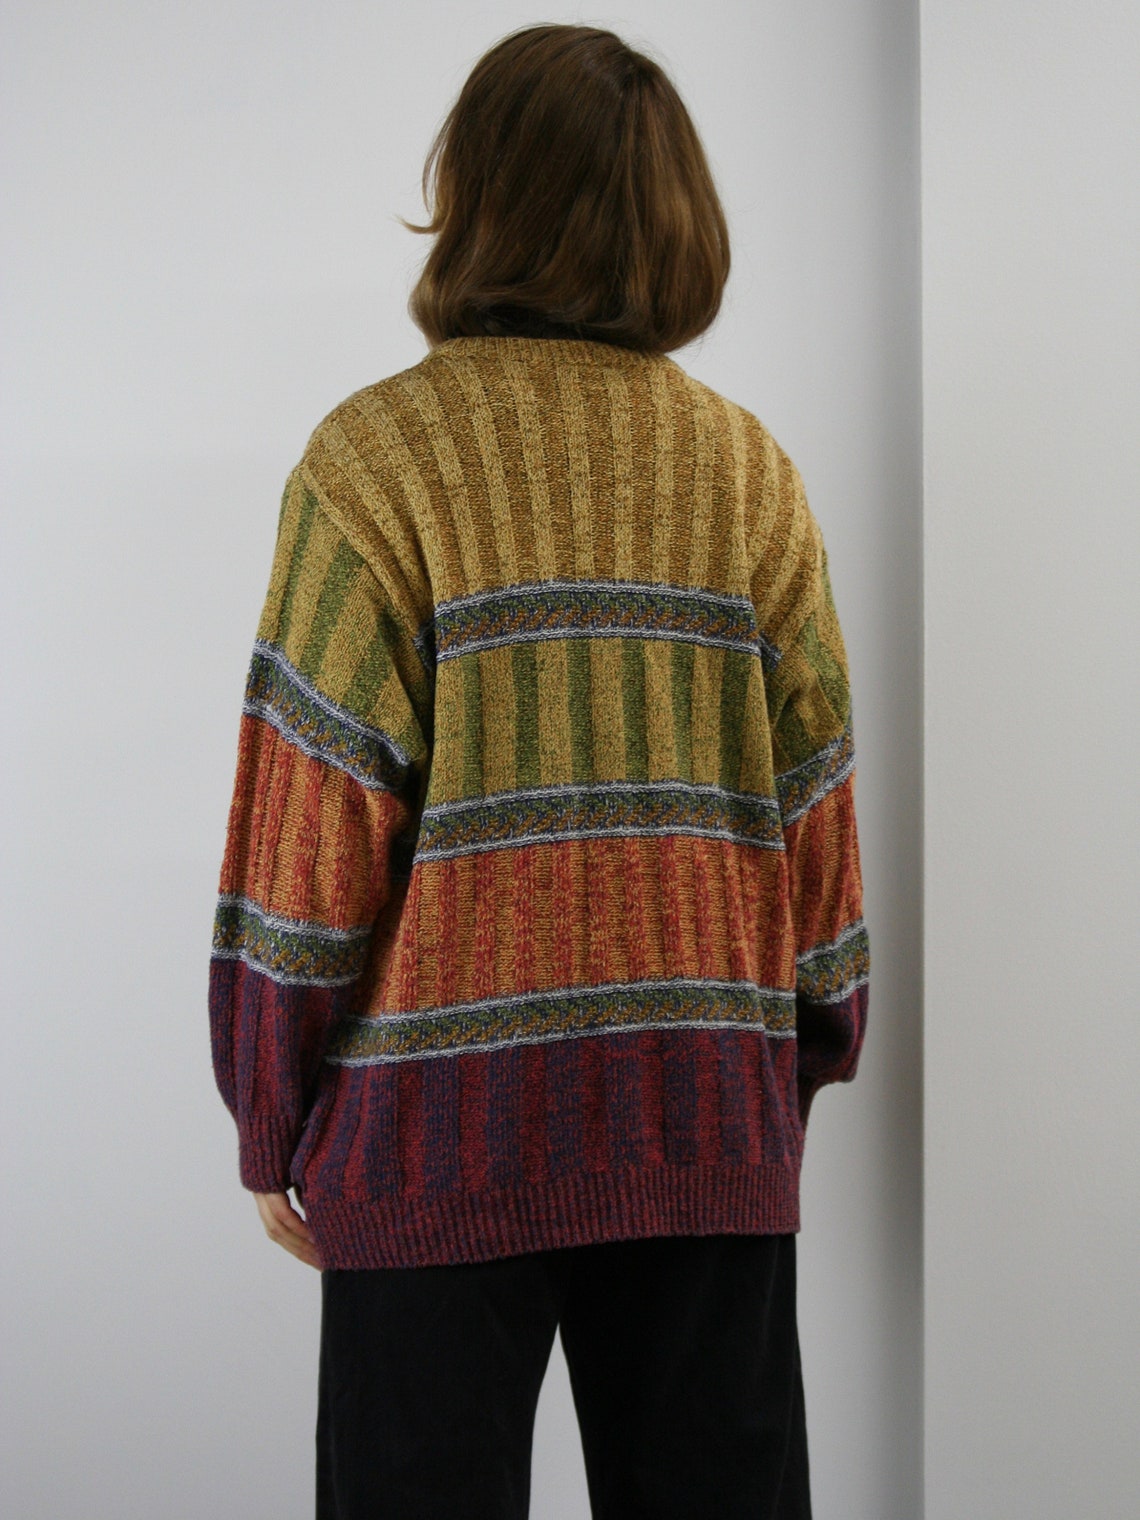 90s Oversized Sweater Cotton/multicolor/unisex | Etsy